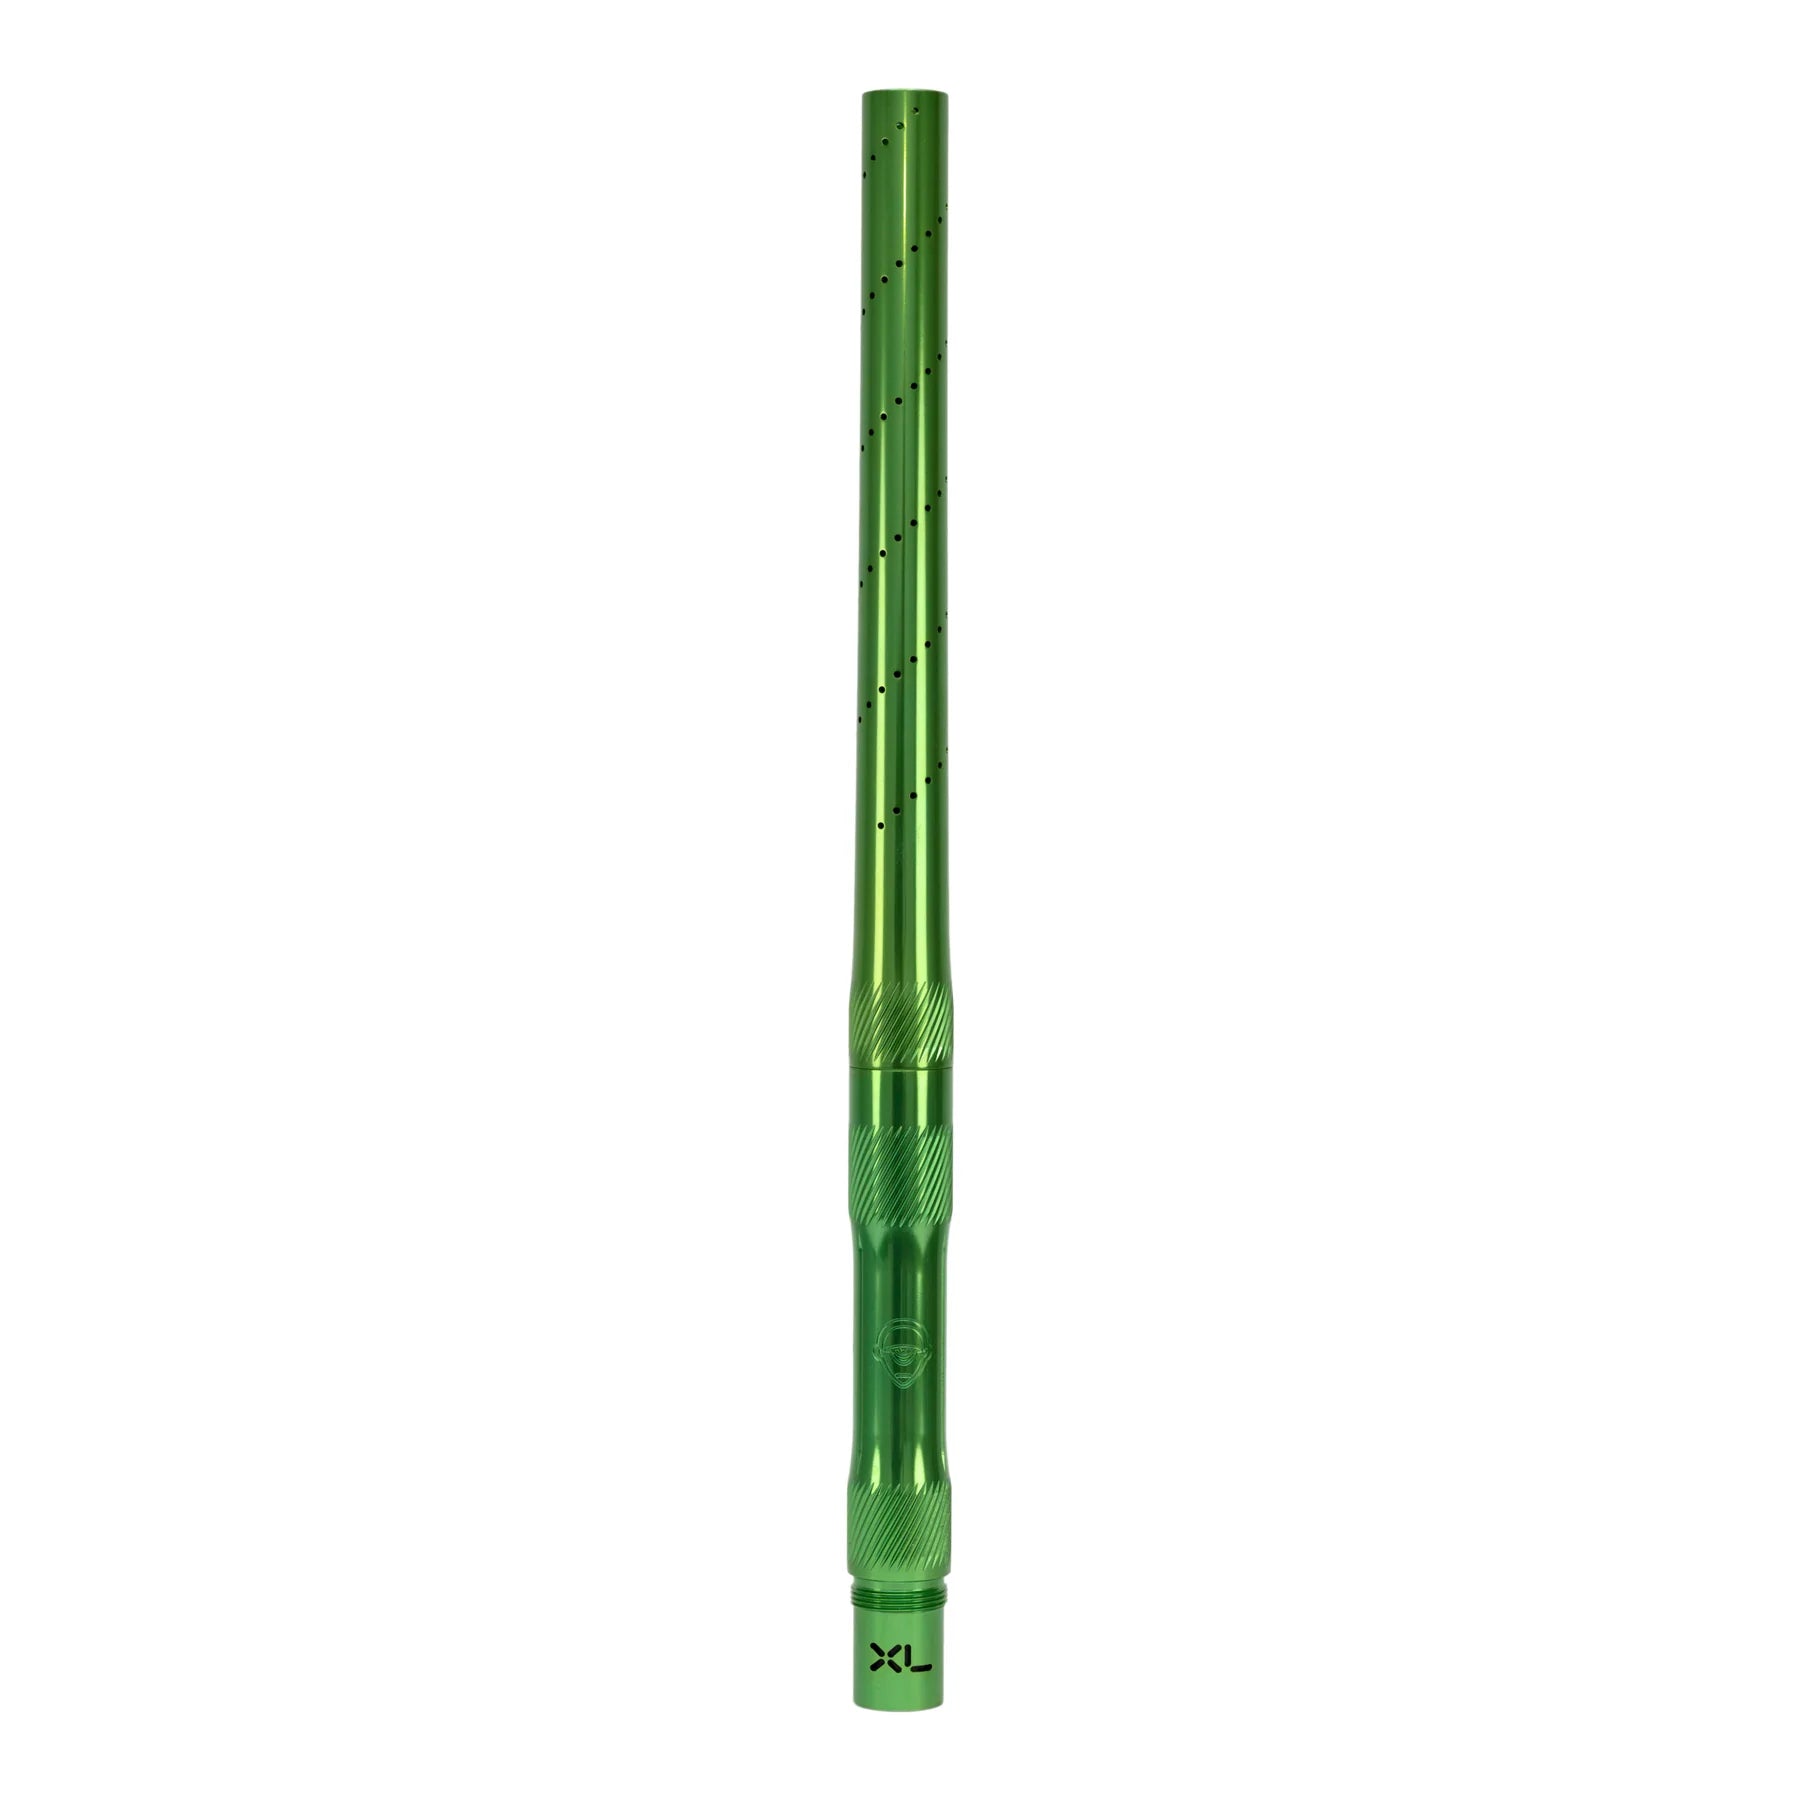 FREAK XL - Green Anodized - Full Barrel Kit - Autococker Thread - Aluminum Insert